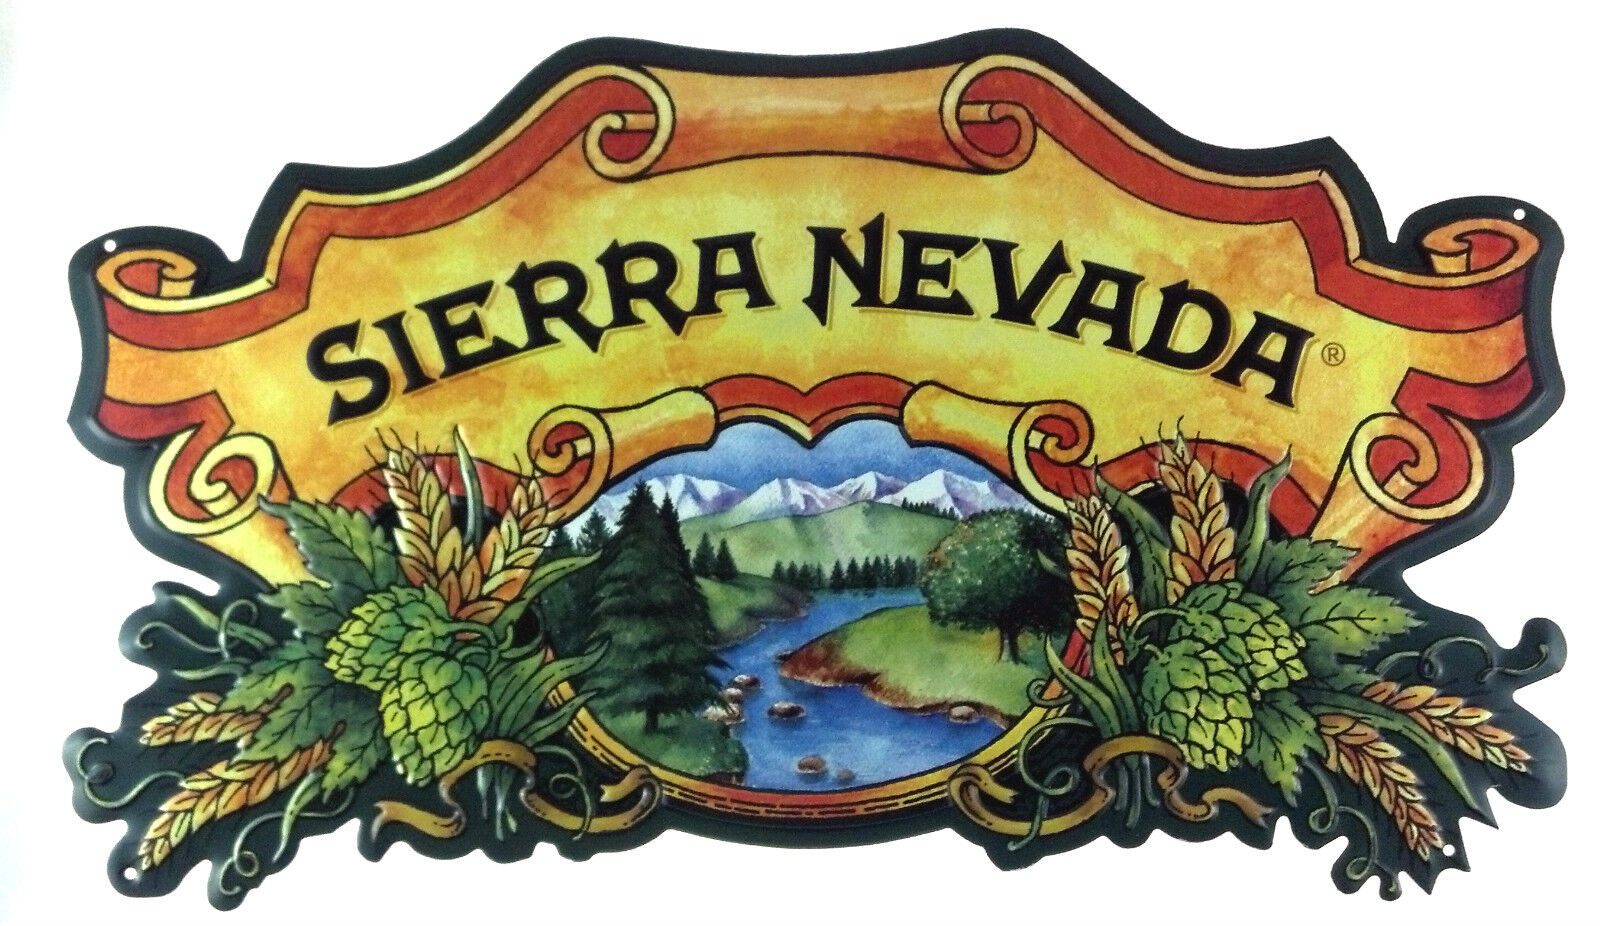 Sierra Nevada Brewery, Califorina - Tin Metal Beer Sign New